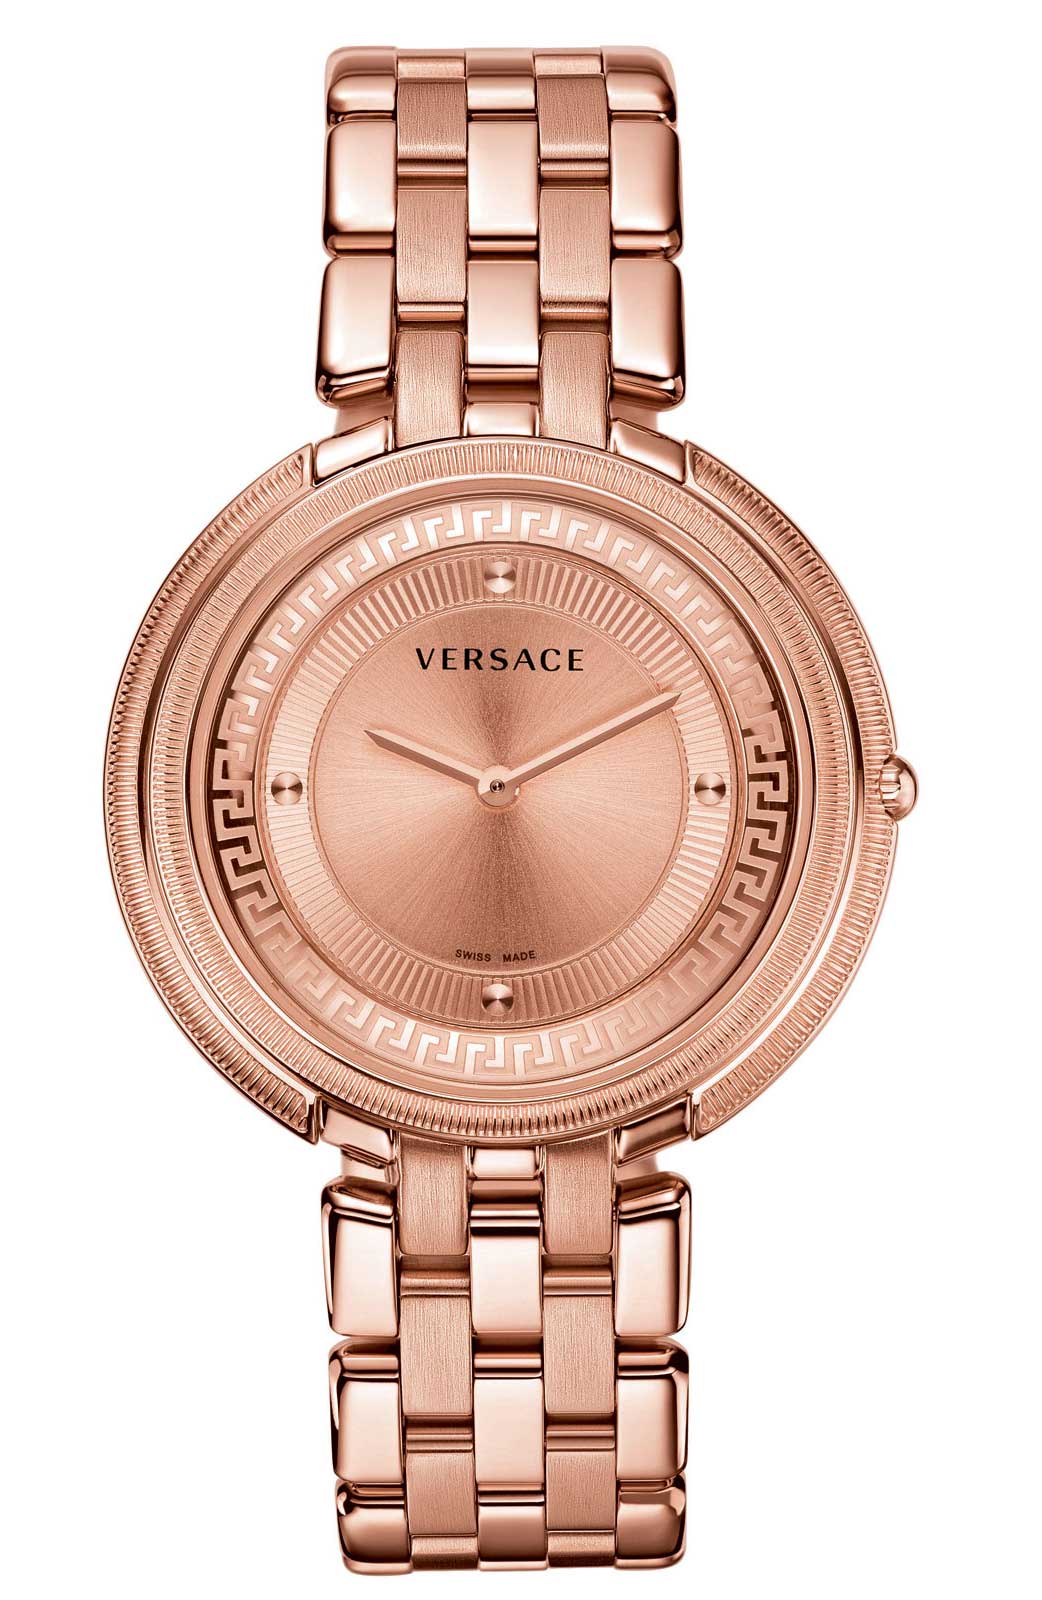 Versace QUARTZ watch 762 GOLDEN